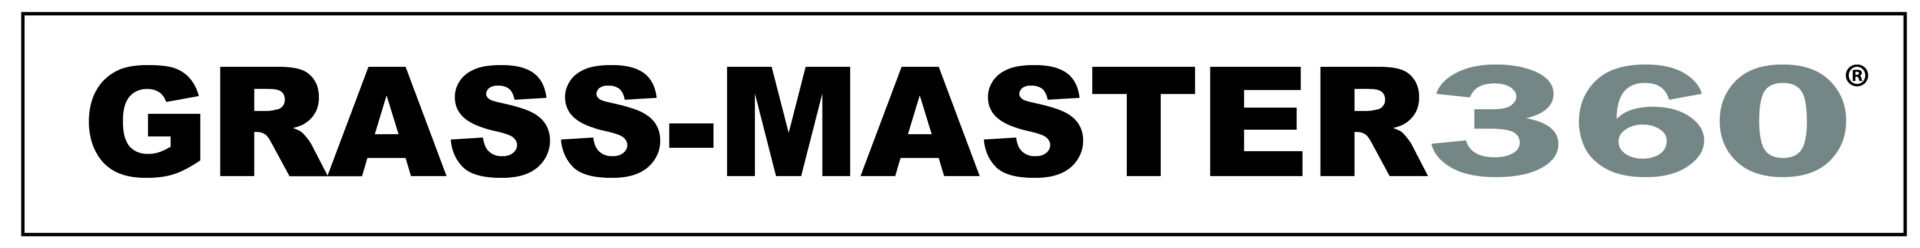 Grass-master360® Logo